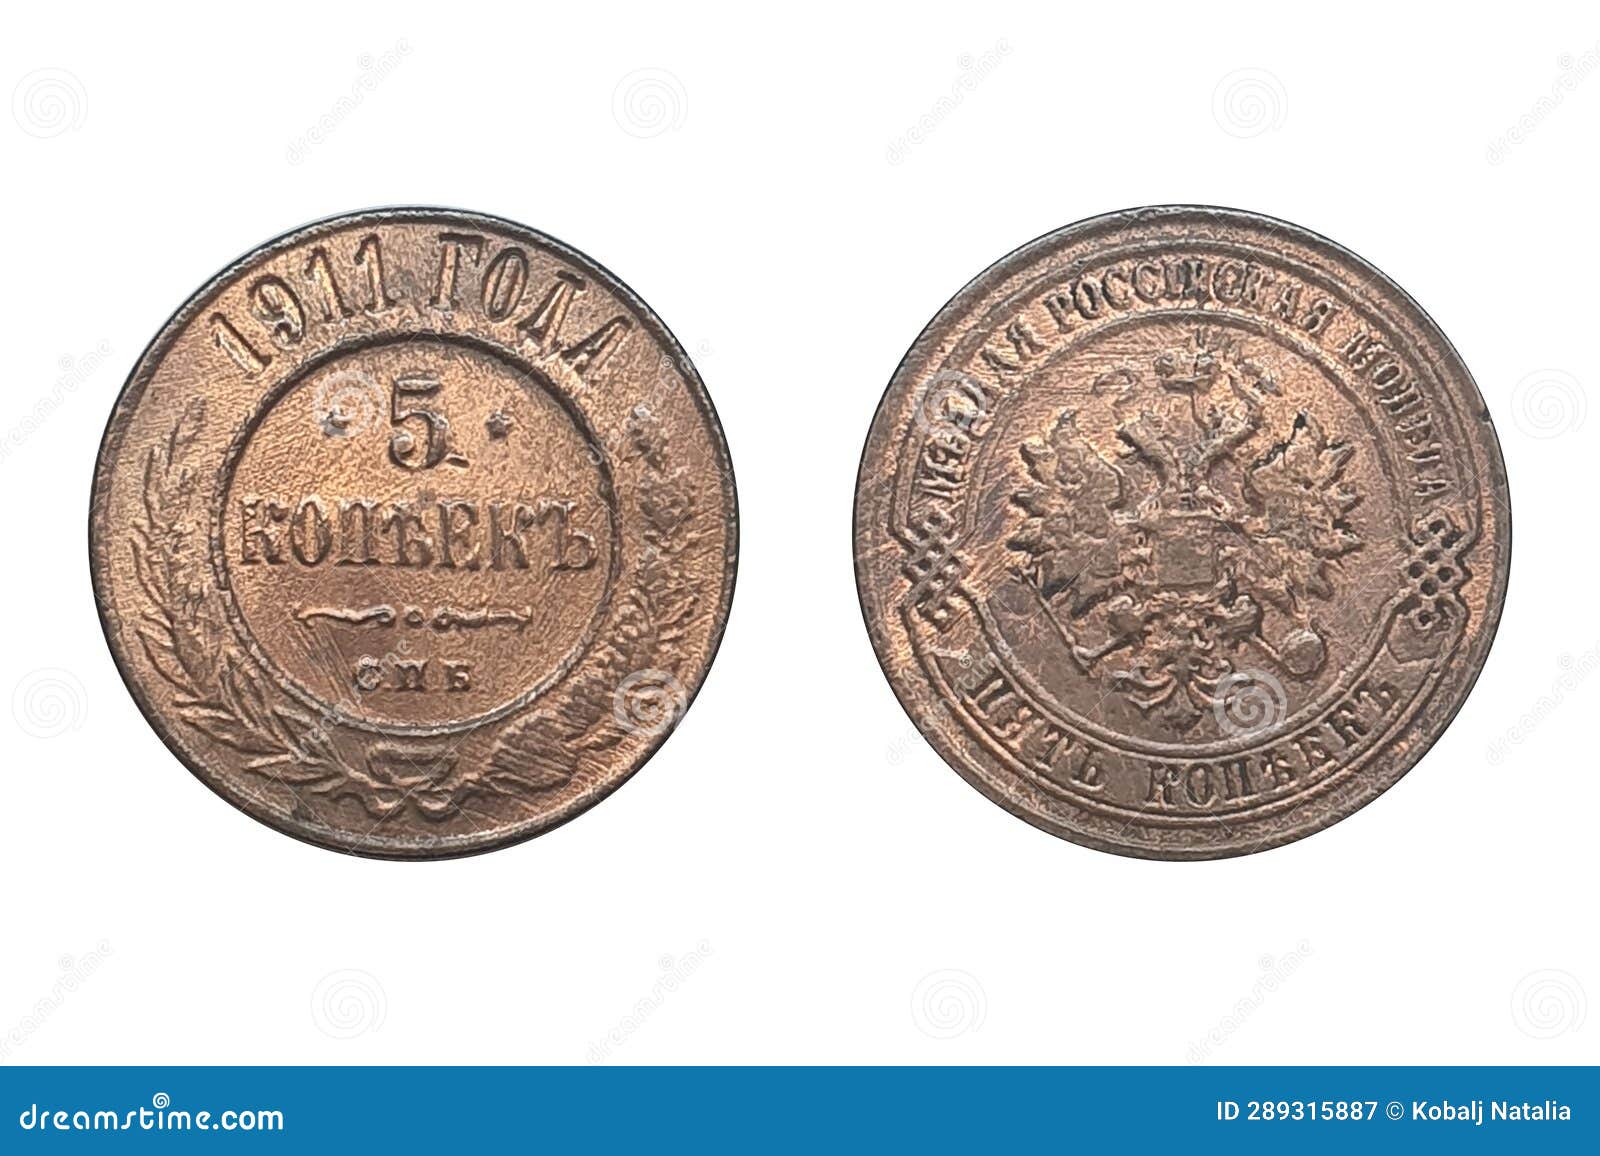 coin 5 kopecks 1911 spb. old coins. 5 kopecks 1911 obverse and reverse